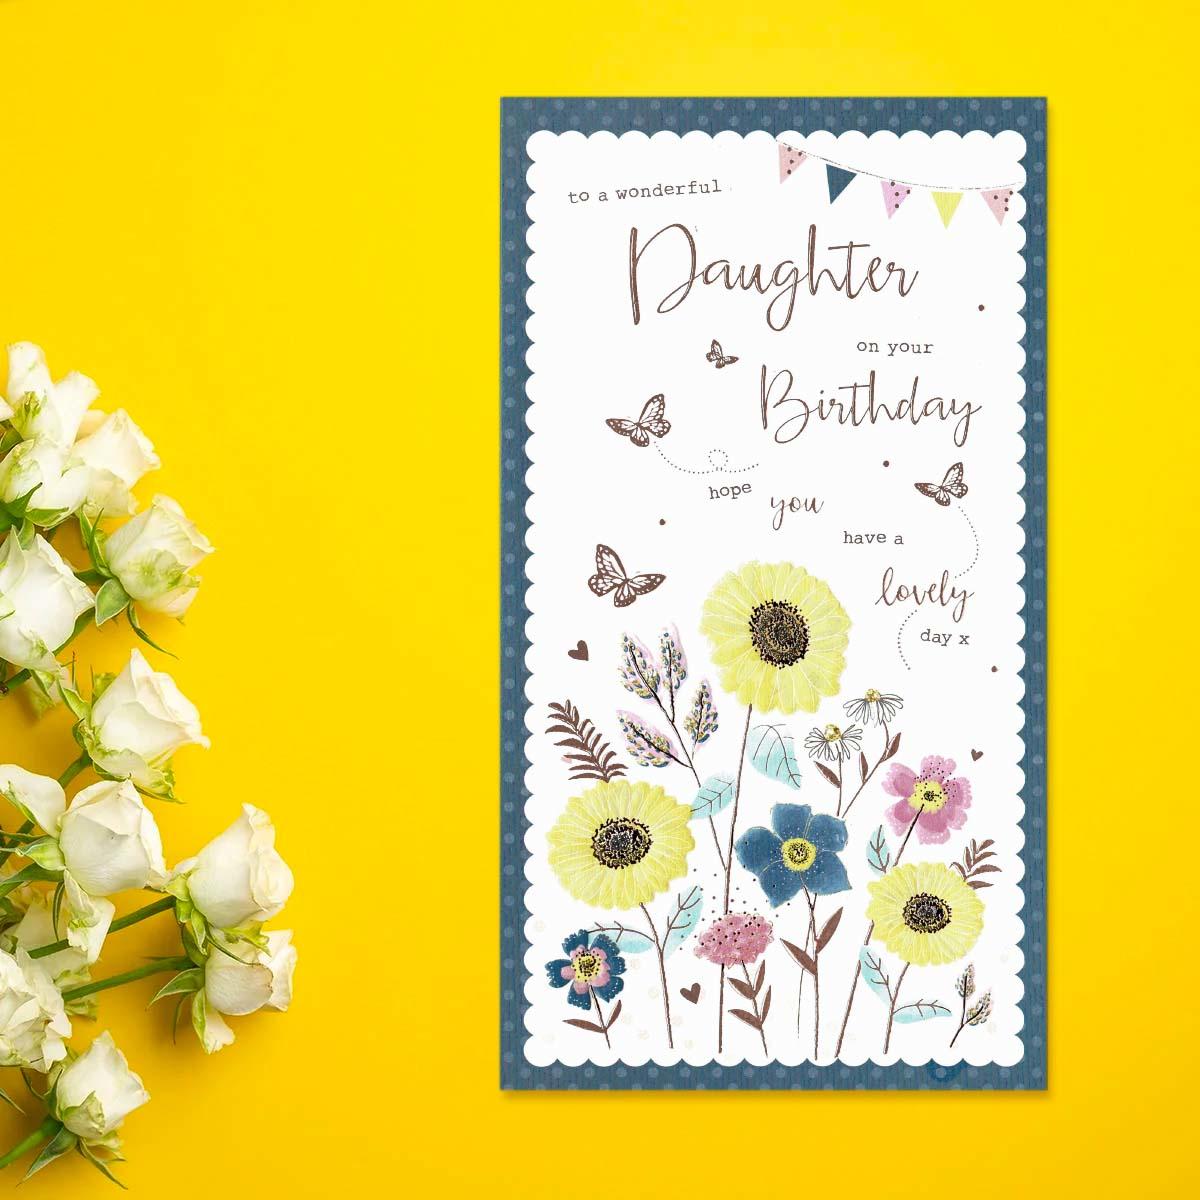 Palladium - Wonderful Daughter Birthday Card Front Image